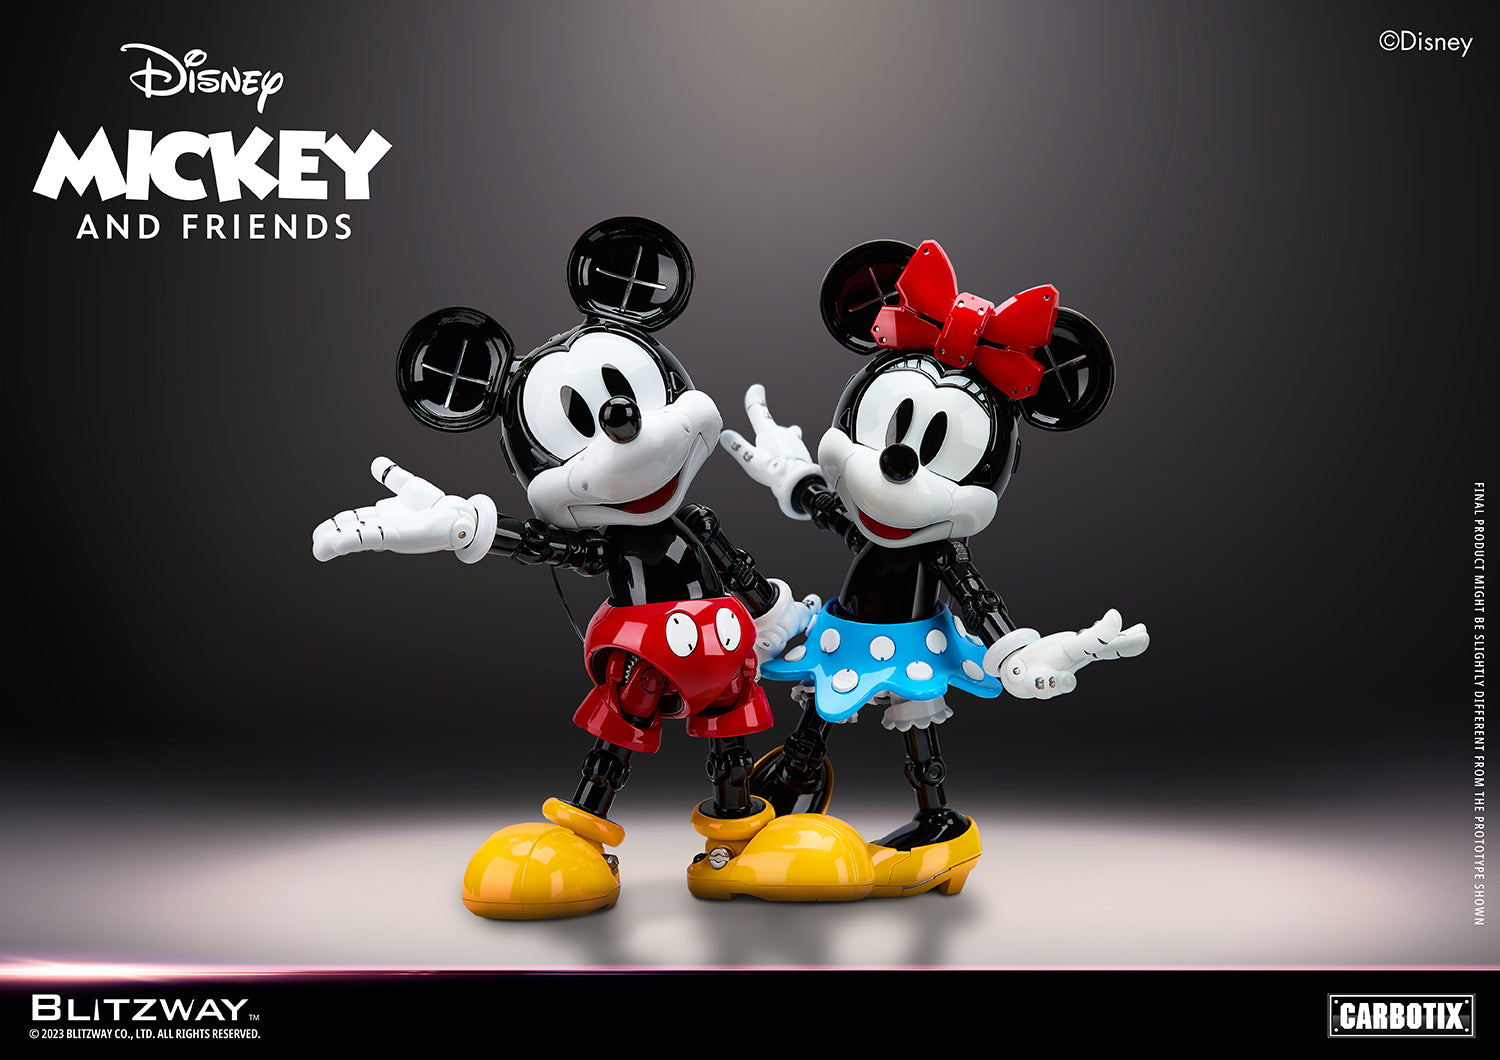 Blitzway - Carbotix - Disney&#39;s Minnie Mouse - Marvelous Toys